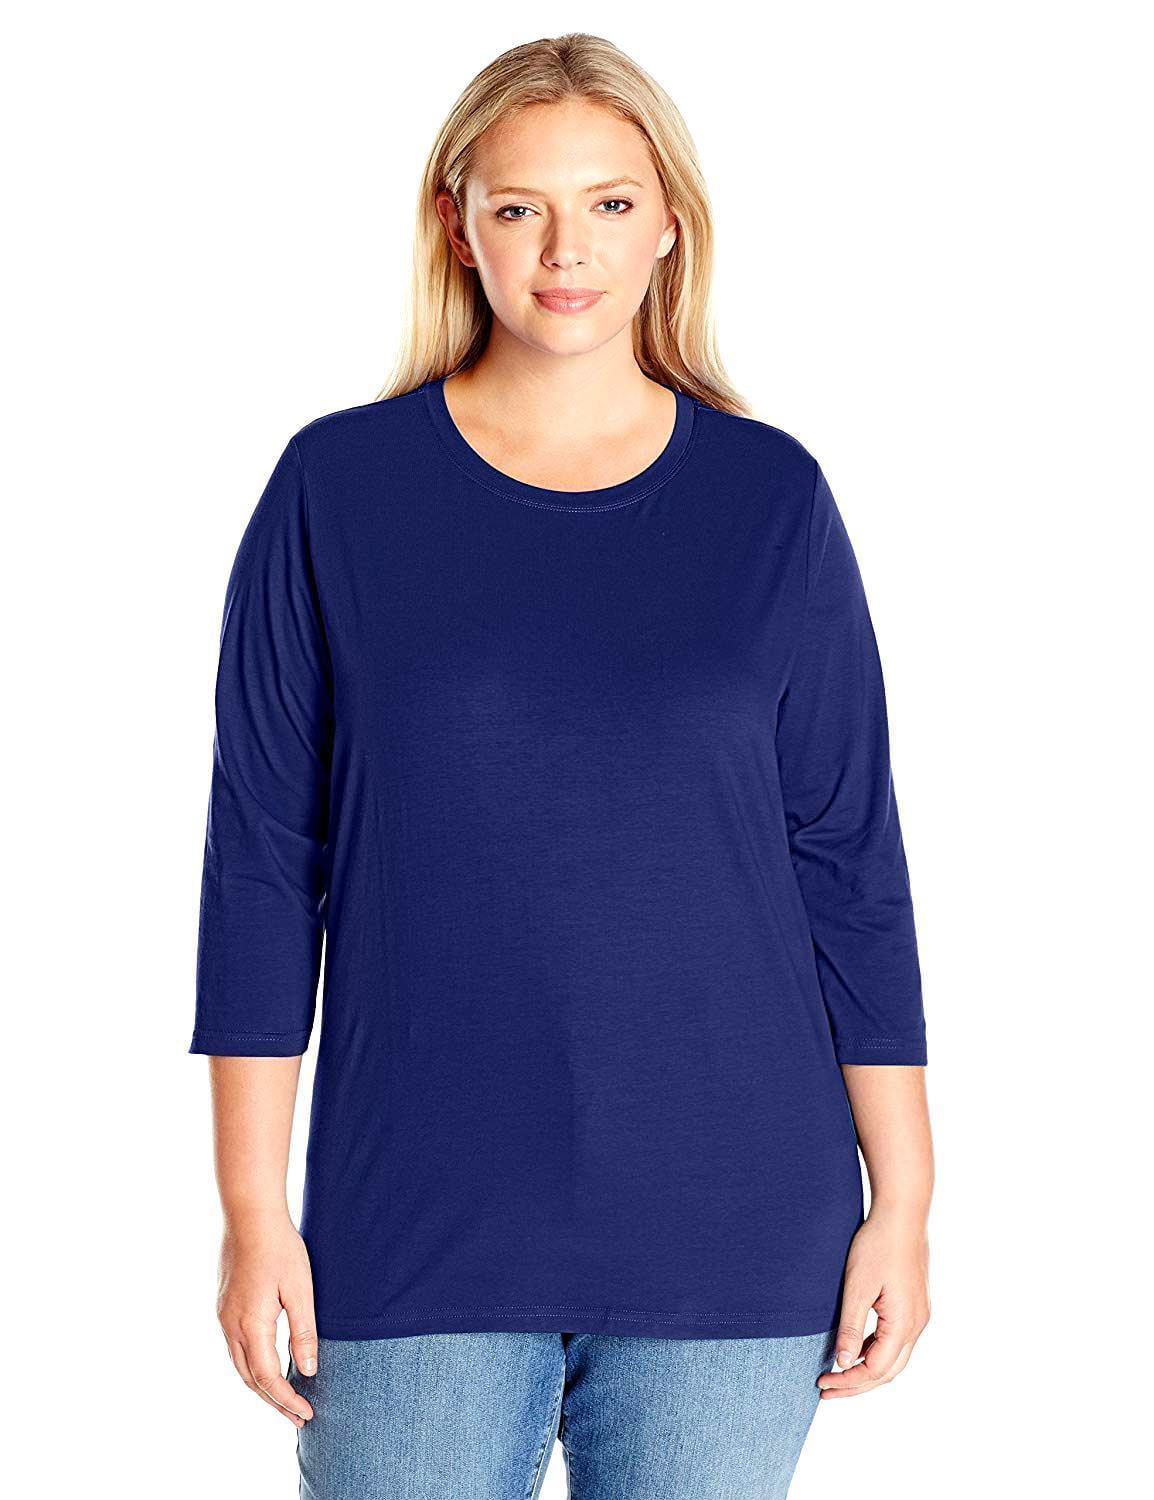 Women/'s plus size sweatshirt Beautiful Isn/'t a Size